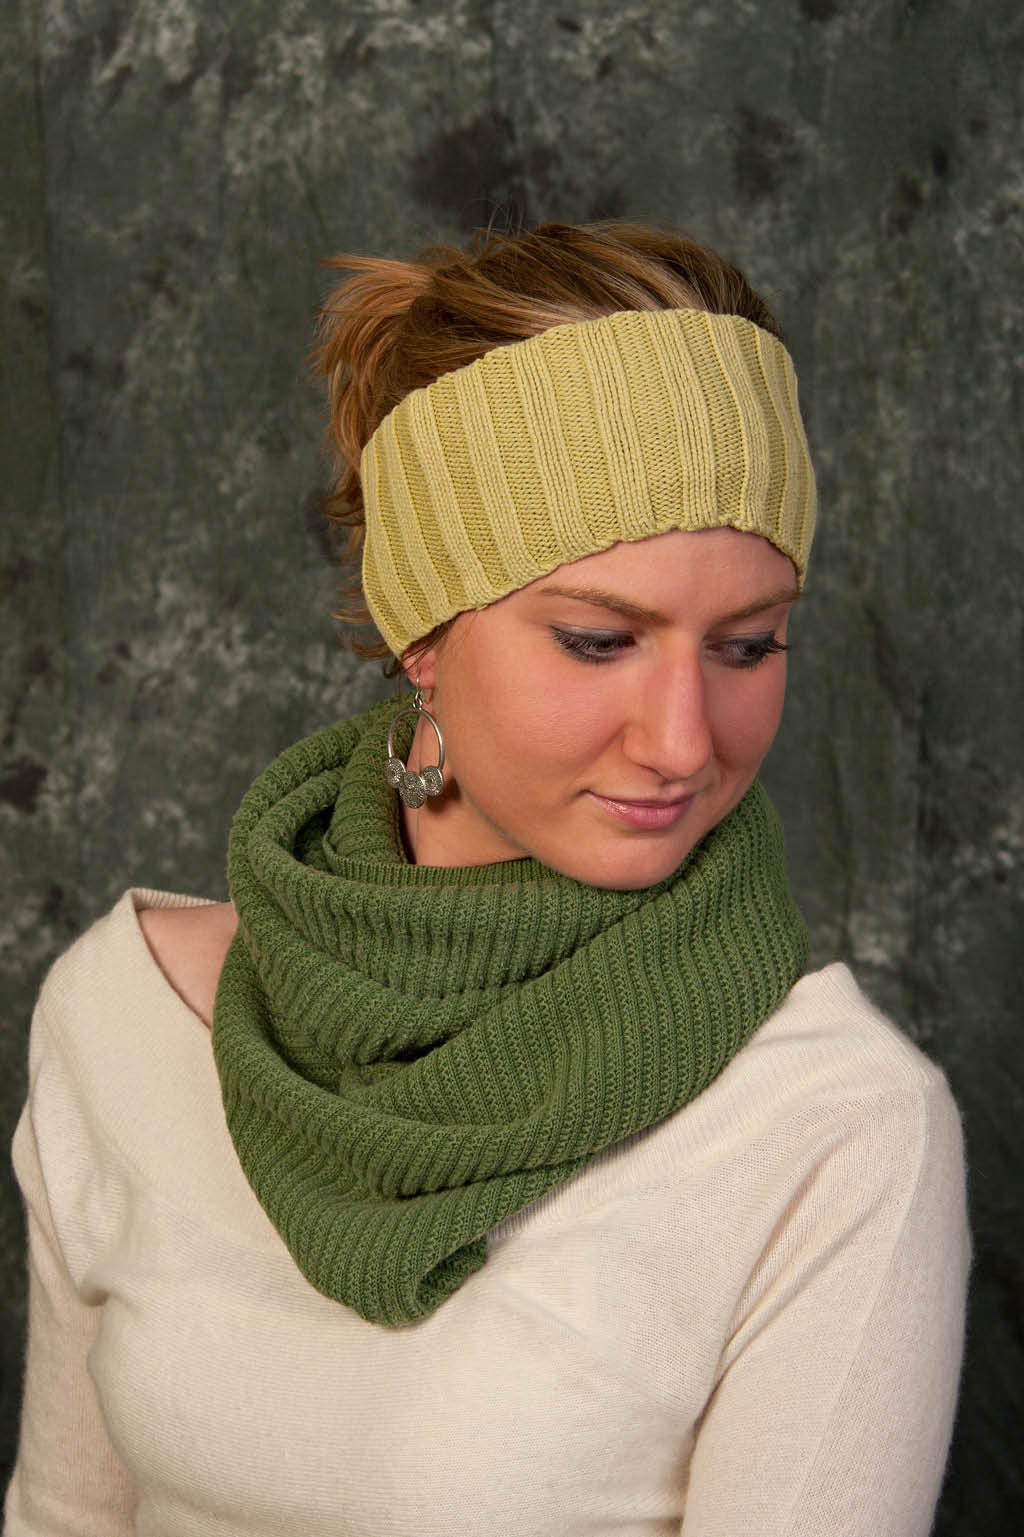 Woman wearing green knit scarf and headband